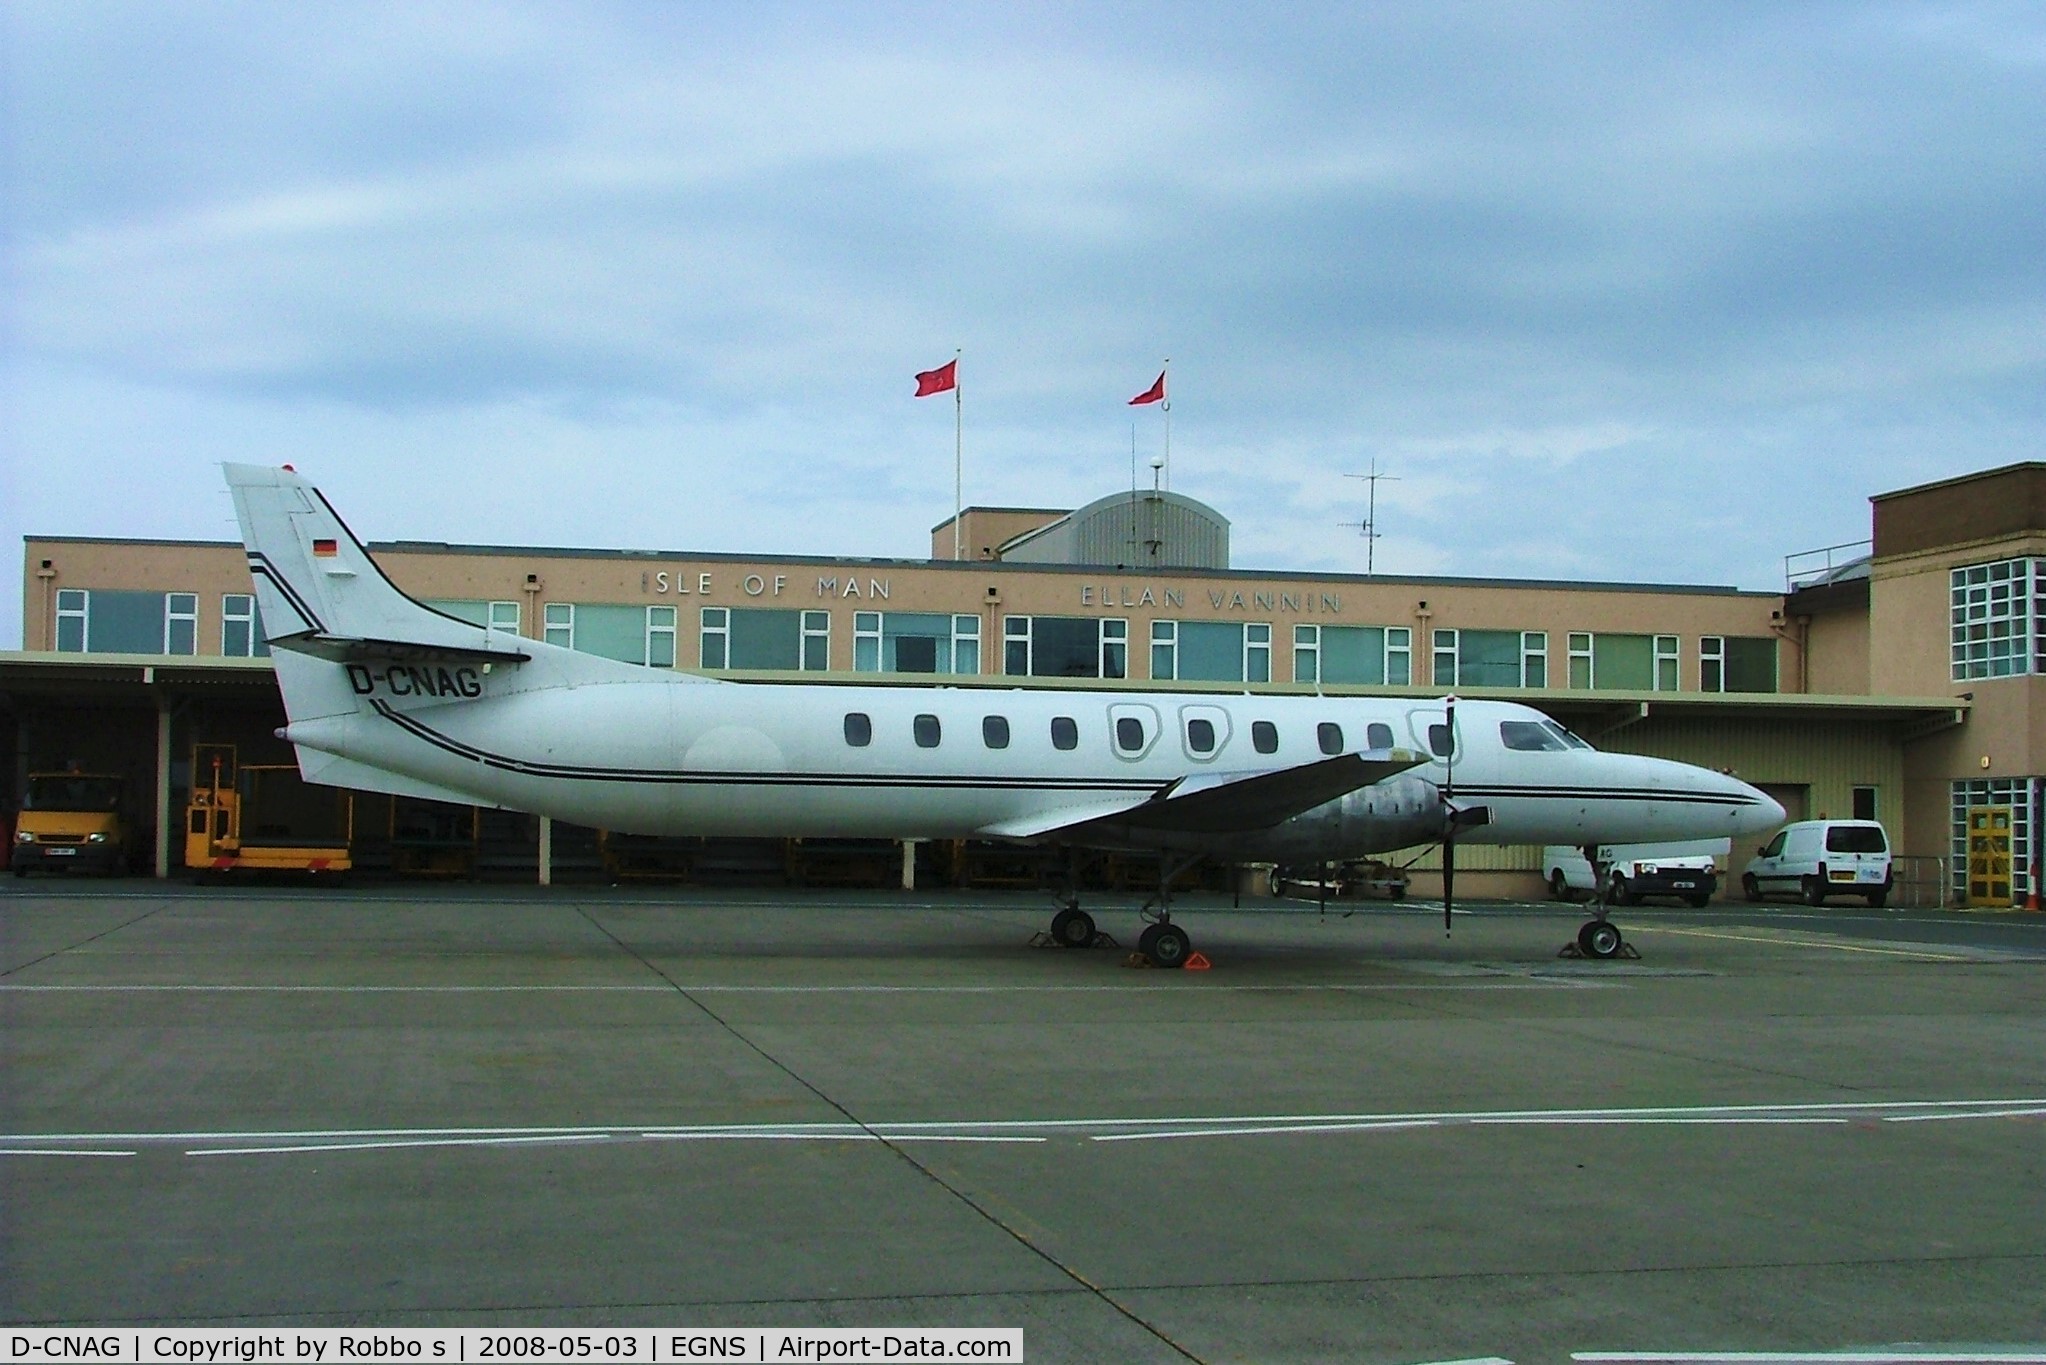 D-CNAG, 1995 Fairchild SA-227DC Metro 23 C/N DC-893B, D-CNAG Metroliner on lease to Manx 2.com at Ronaldsway Airport.